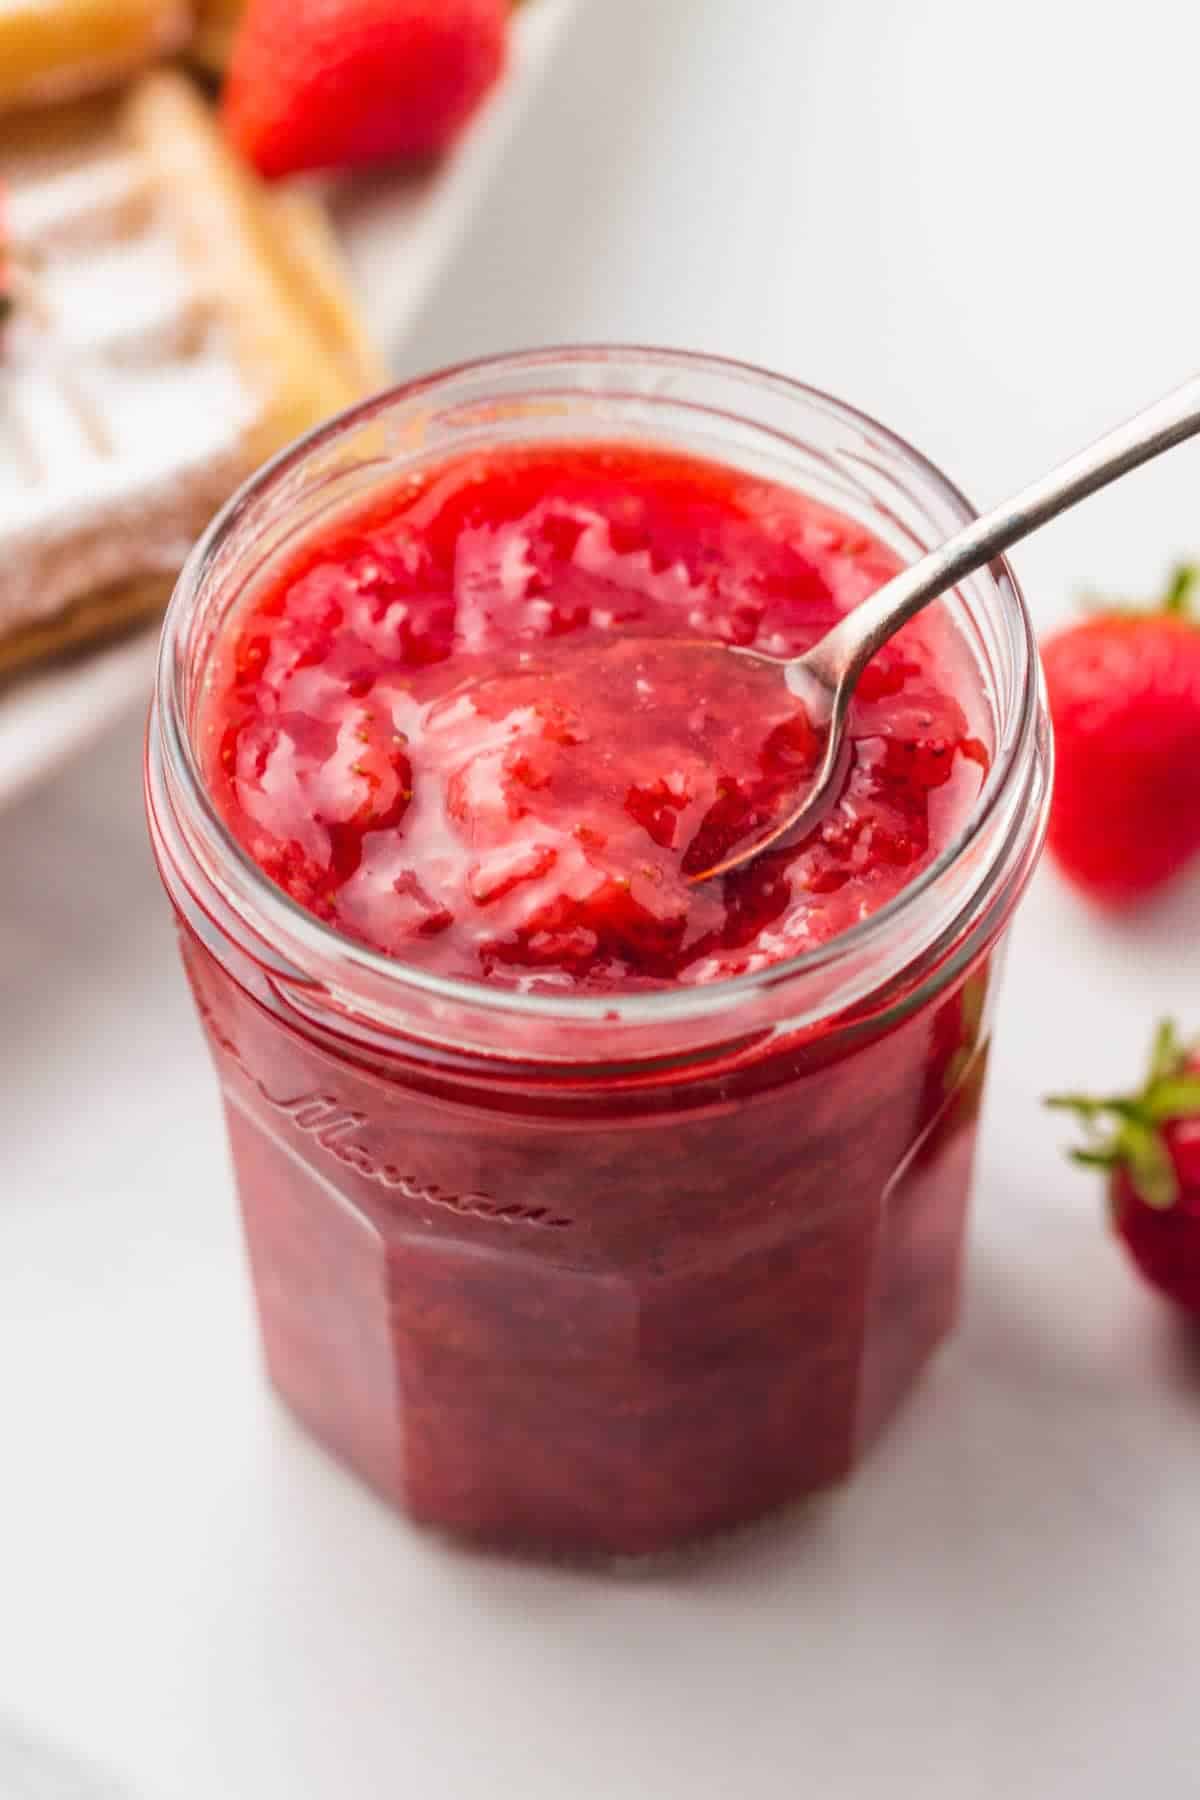 A jar of strawberry sauce